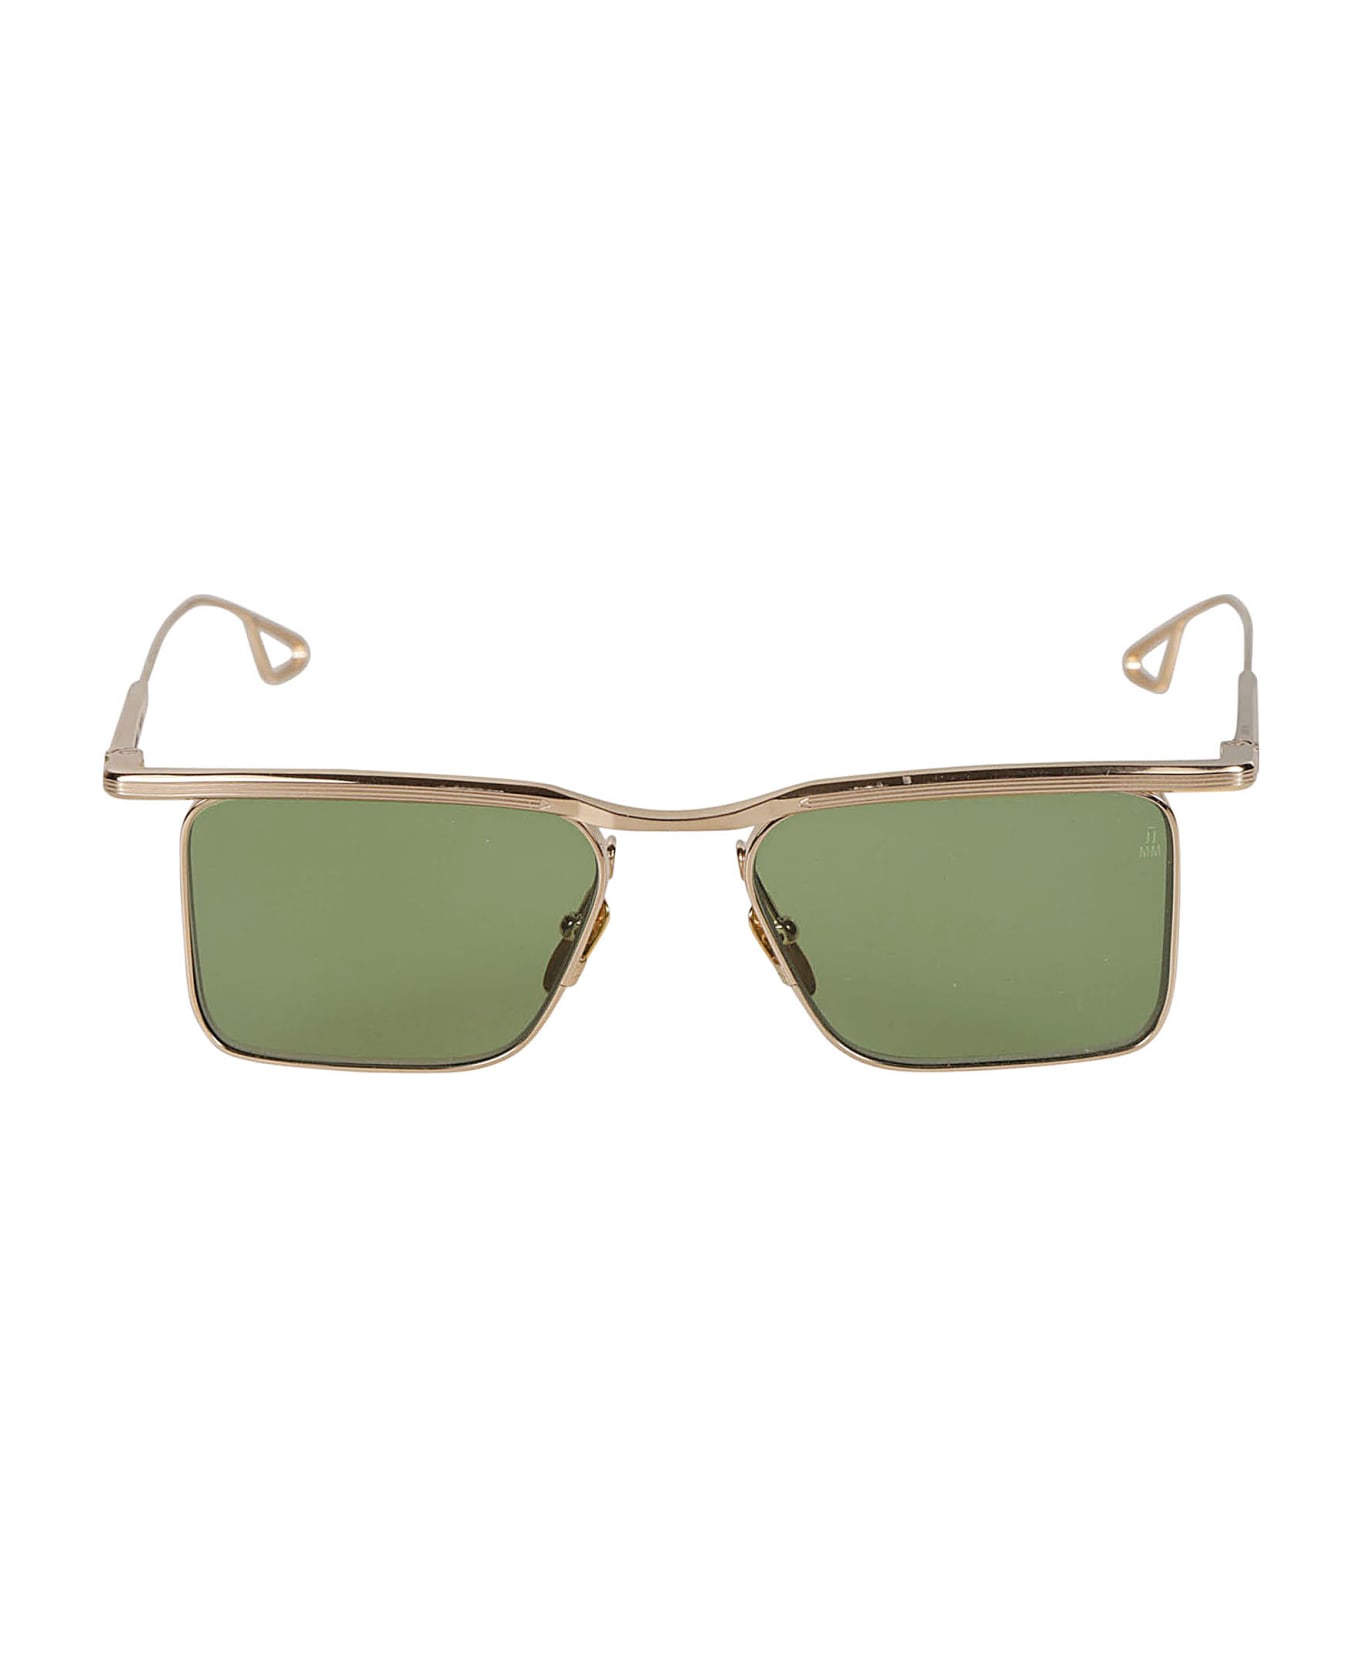 Jacques Marie Mage Beauregard Sunglasses Sunglasses - Gold